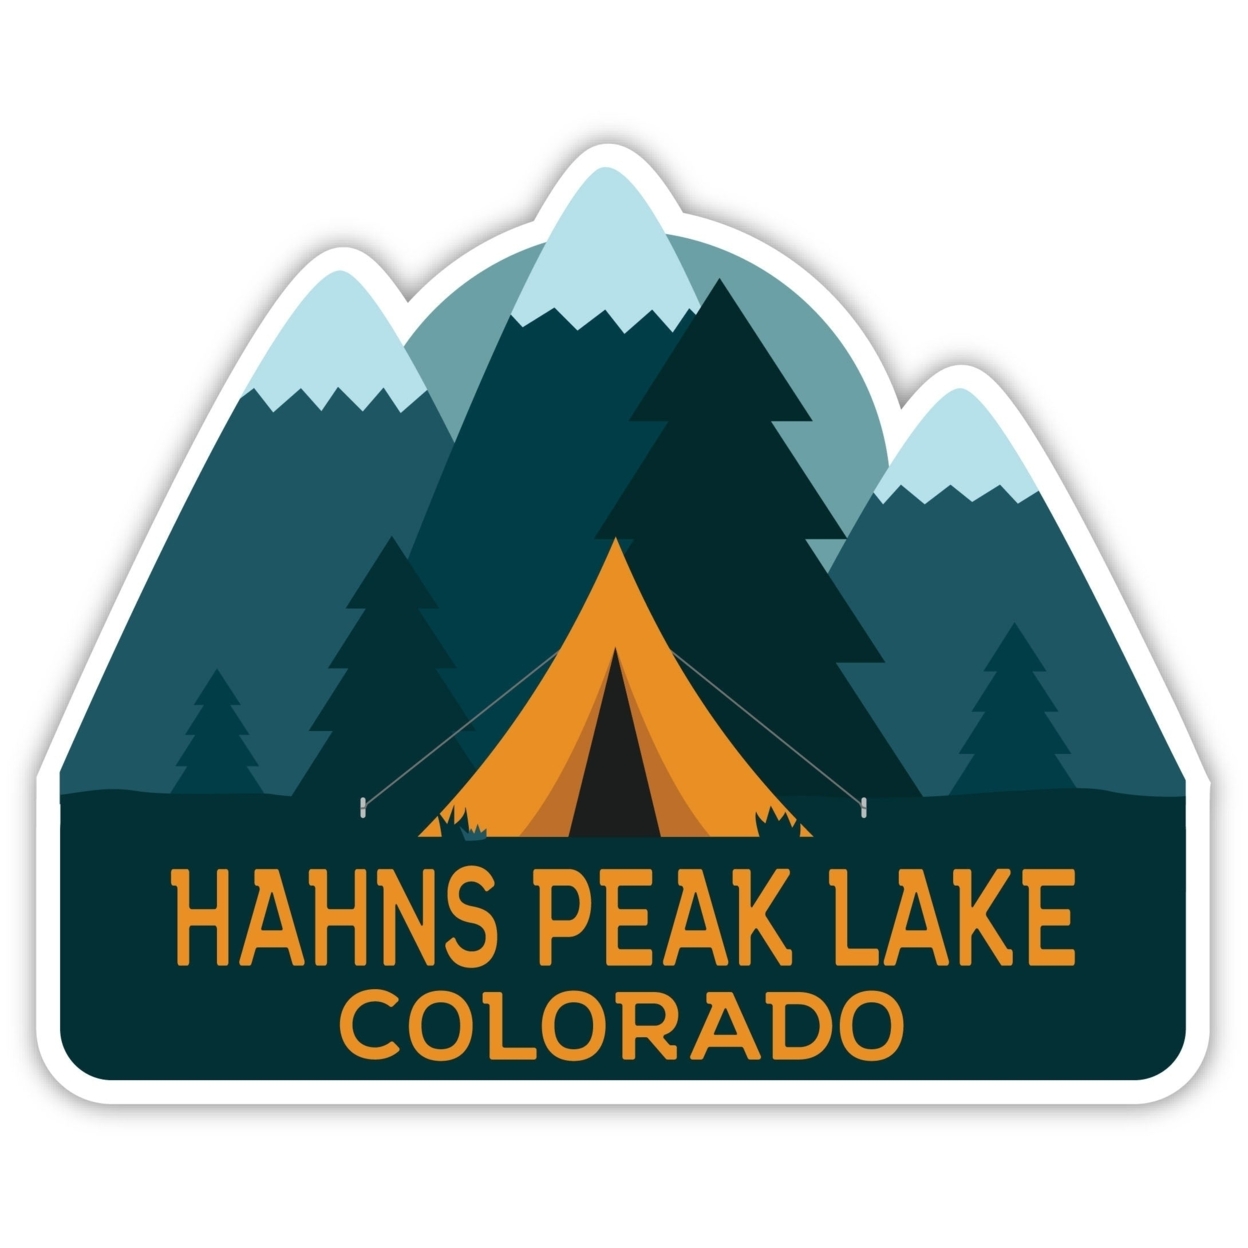 Hahns Peak Lake Colorado Souvenir Decorative Stickers (Choose Theme And Size) - 4-Pack, 4-Inch, Tent